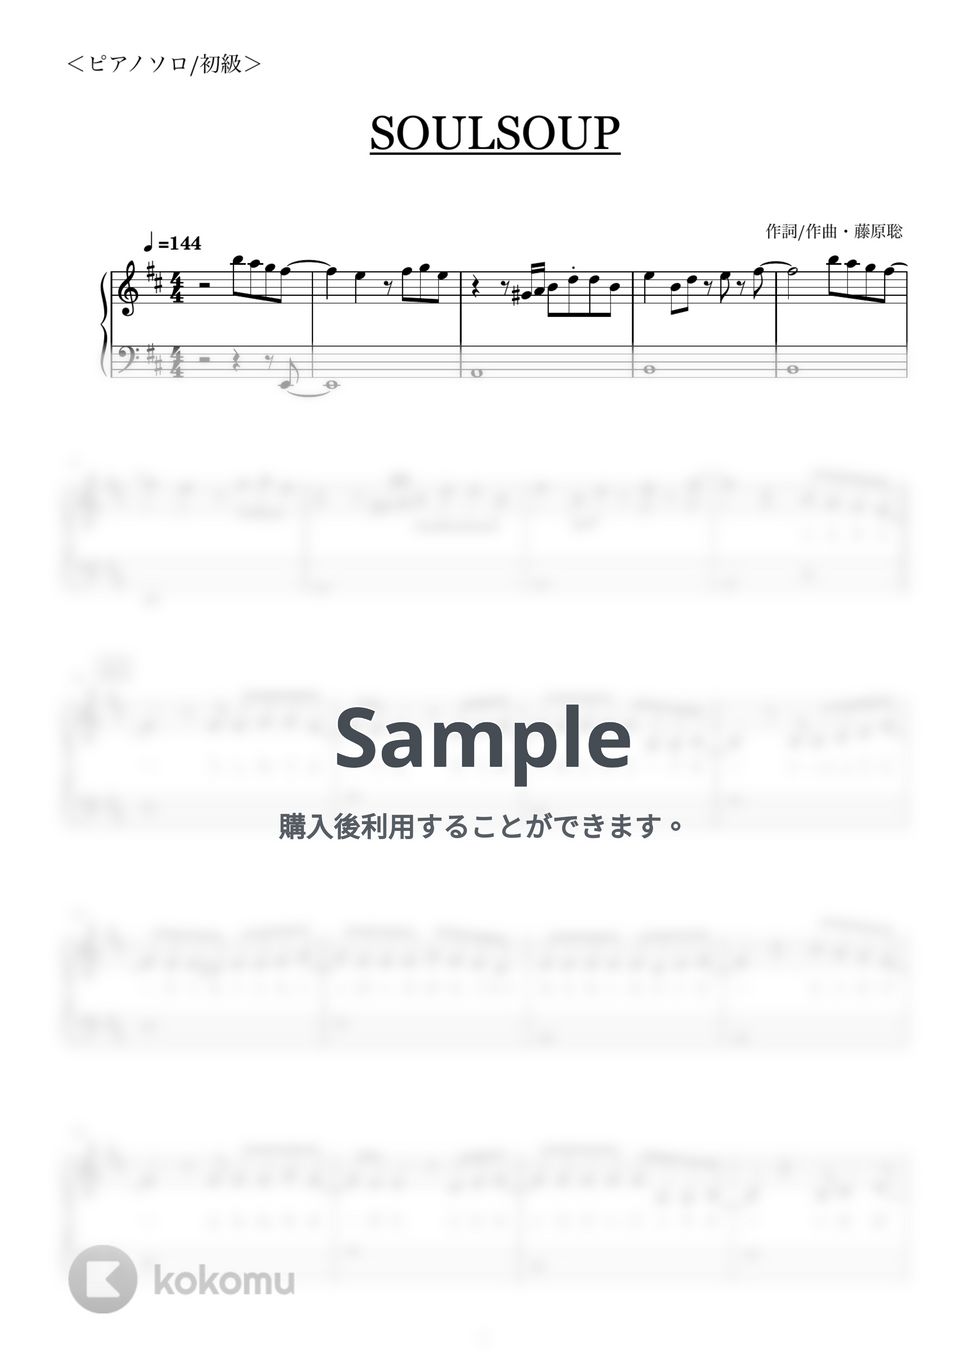 Official髭男dism - SOULSOUP：ピアノソロ/初級 (劇場版『SPY×FAMILY』主題歌) by pyu_fumen